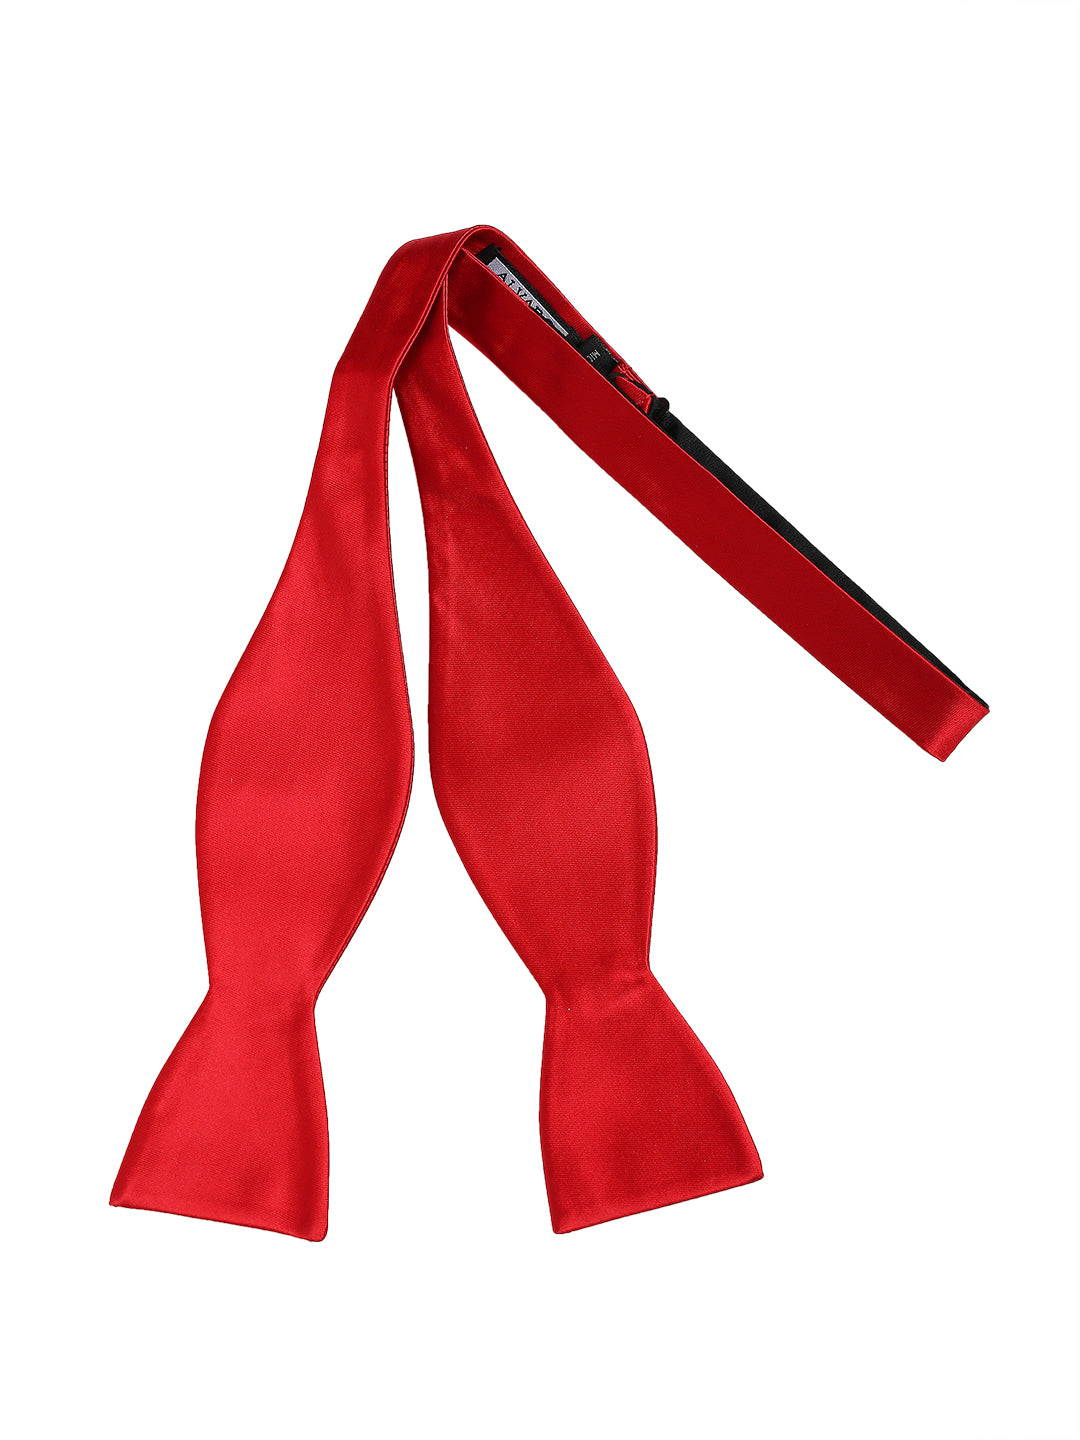 Alvaro Castagnino Men's Red Colored Microfiber Bow Tie